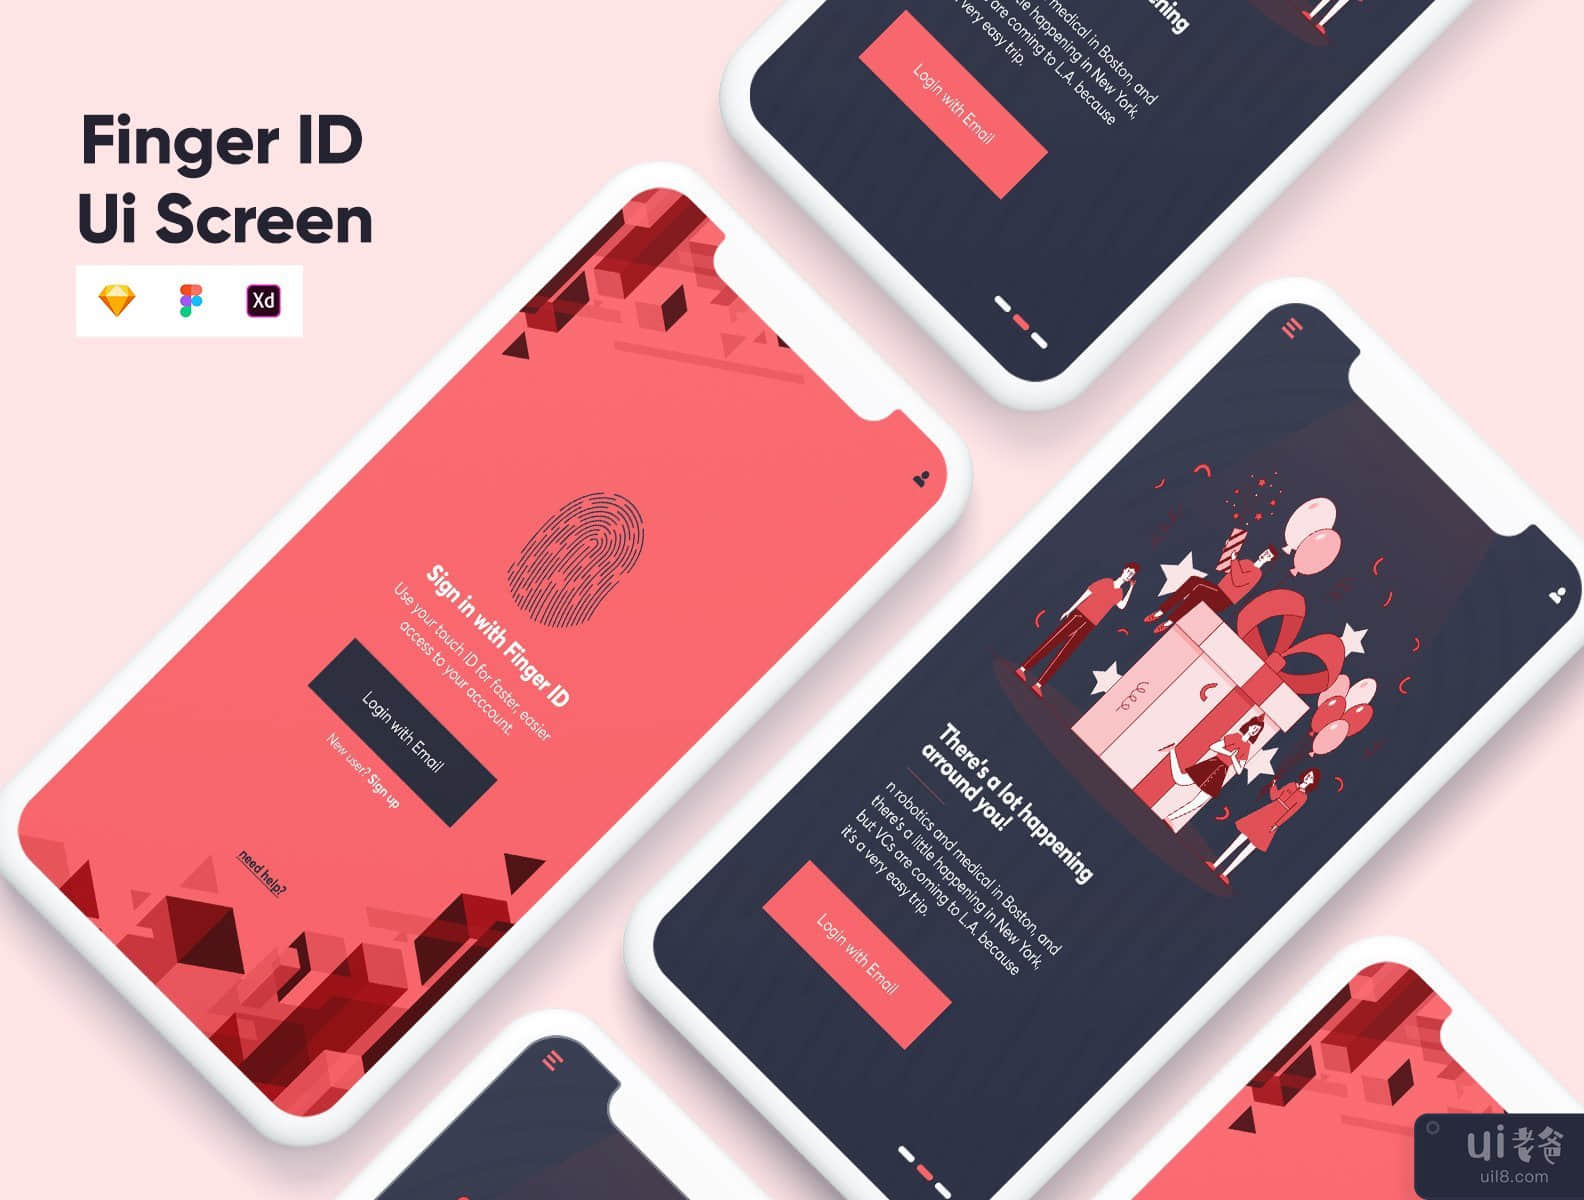 指纹识别移动应用程序设计(Finger ID Mobile App Design)插图